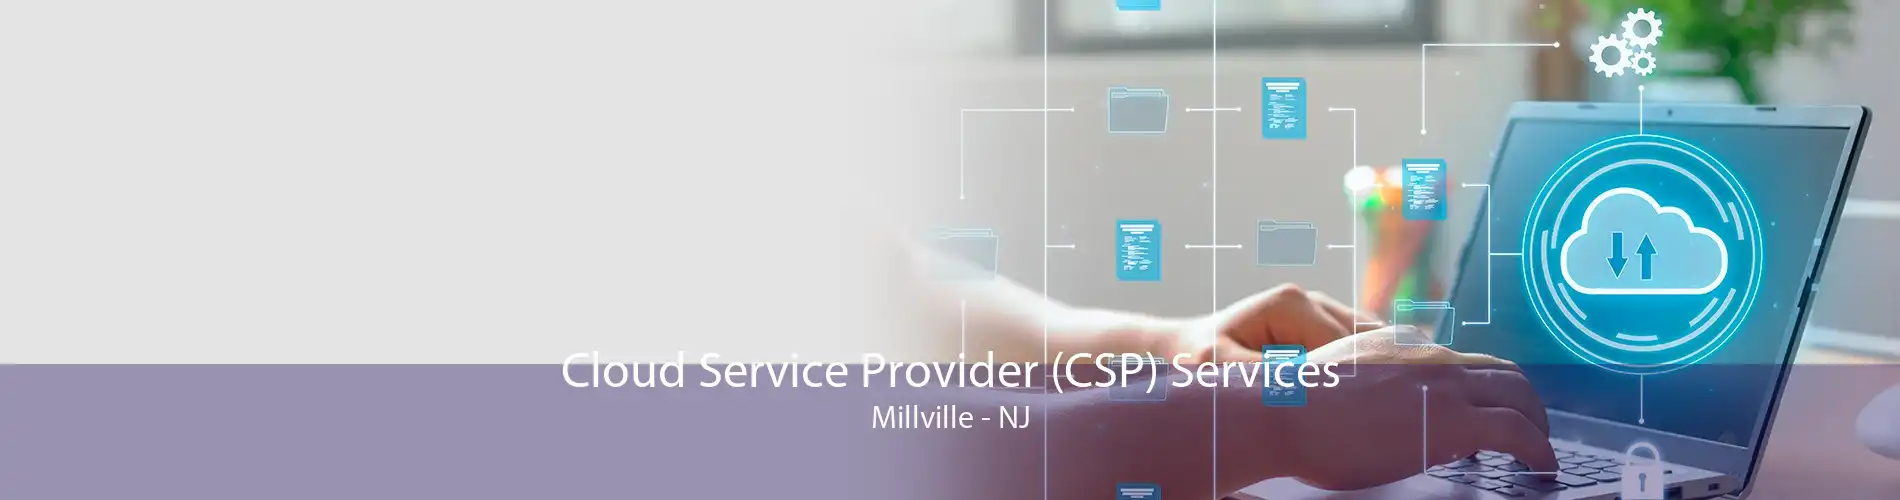 Cloud Service Provider (CSP) Services Millville - NJ